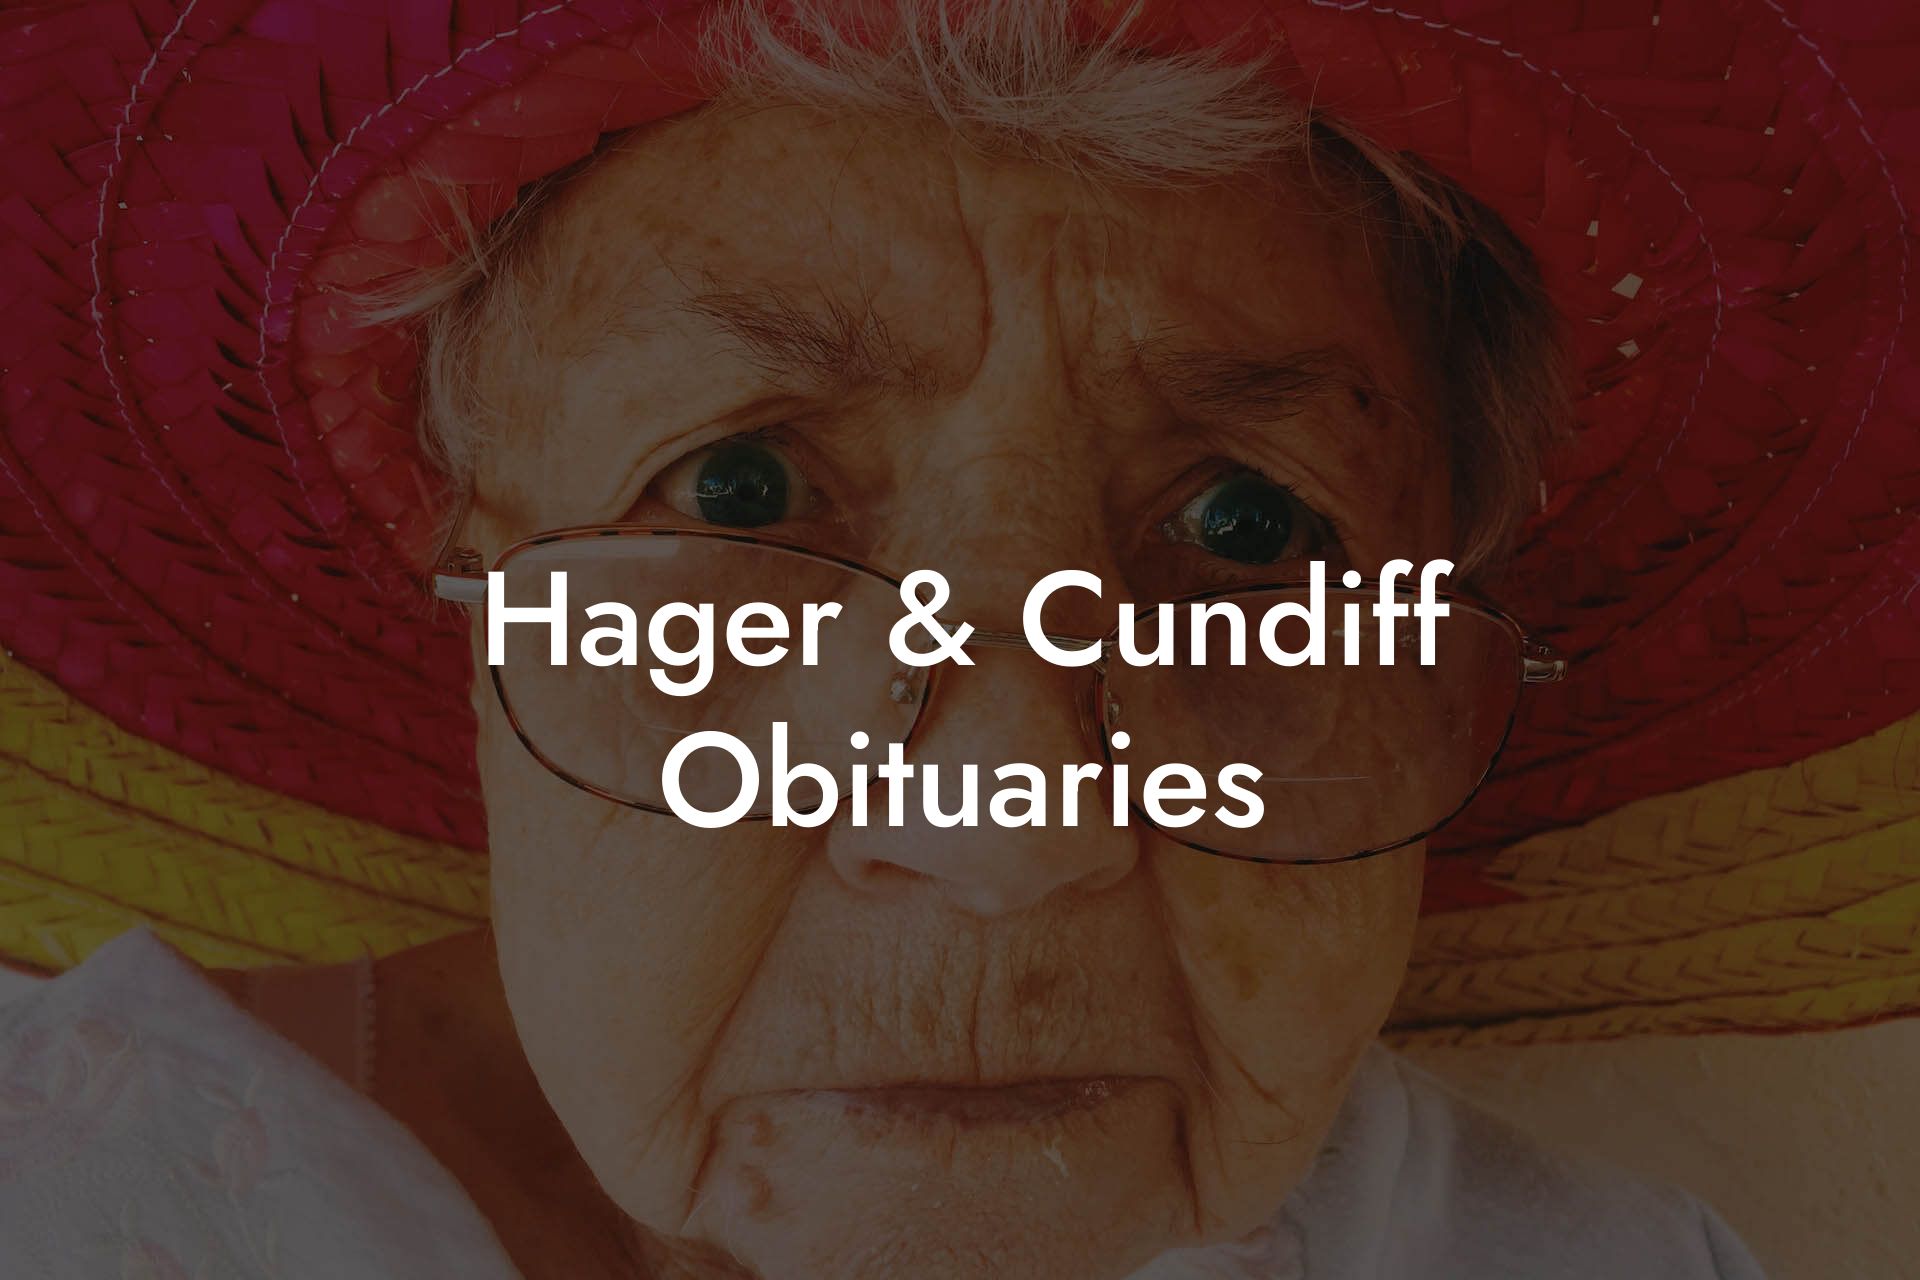 Hager & Cundiff Obituaries